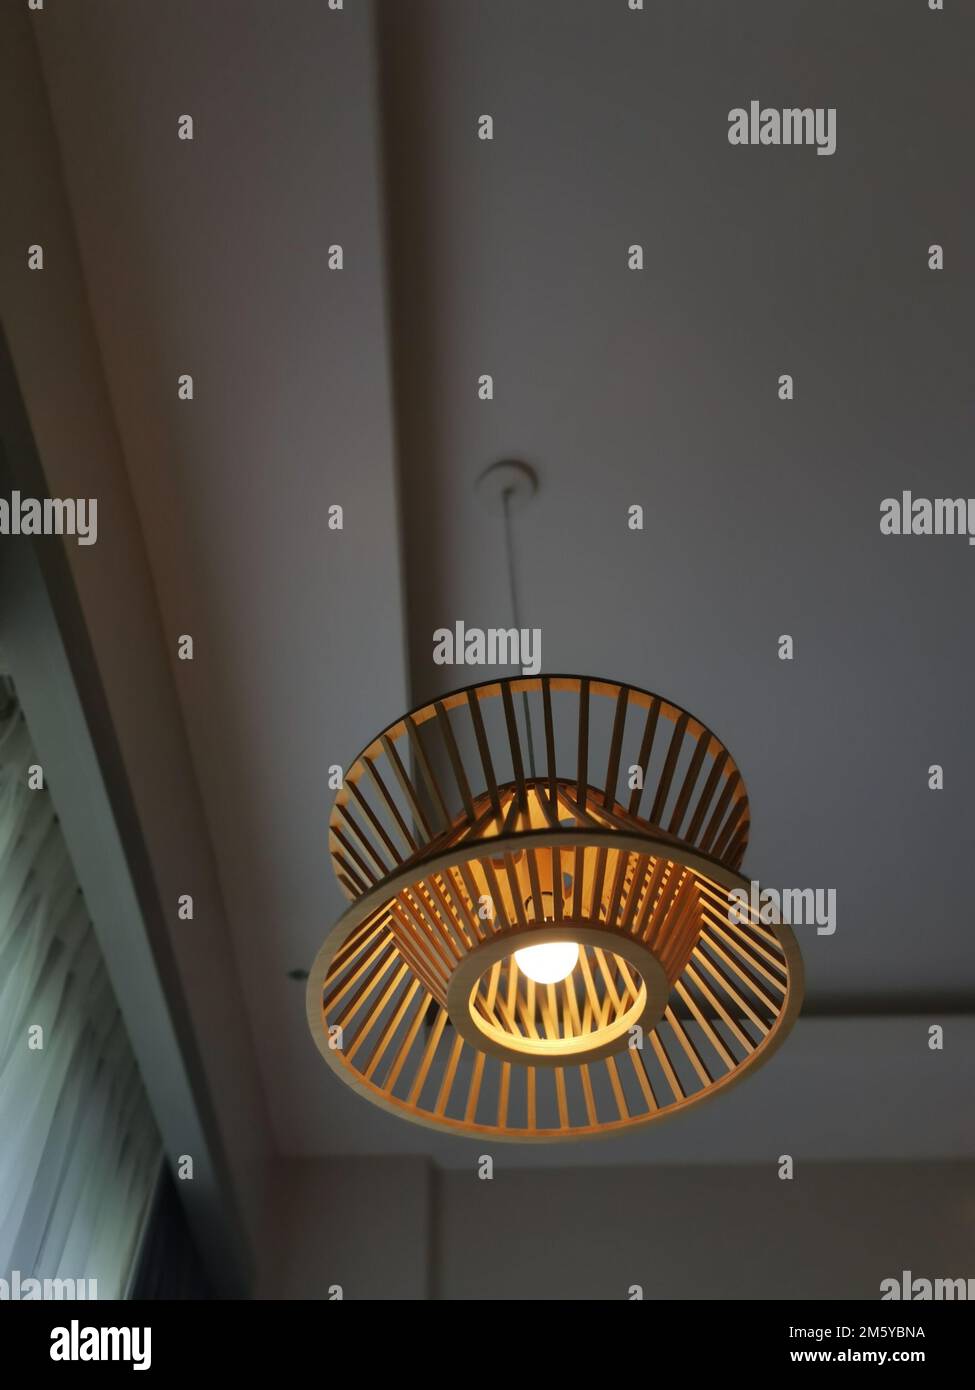 Modern Light/Lamp Shade Ceiling Pendant Metal Laser Cut Pattern